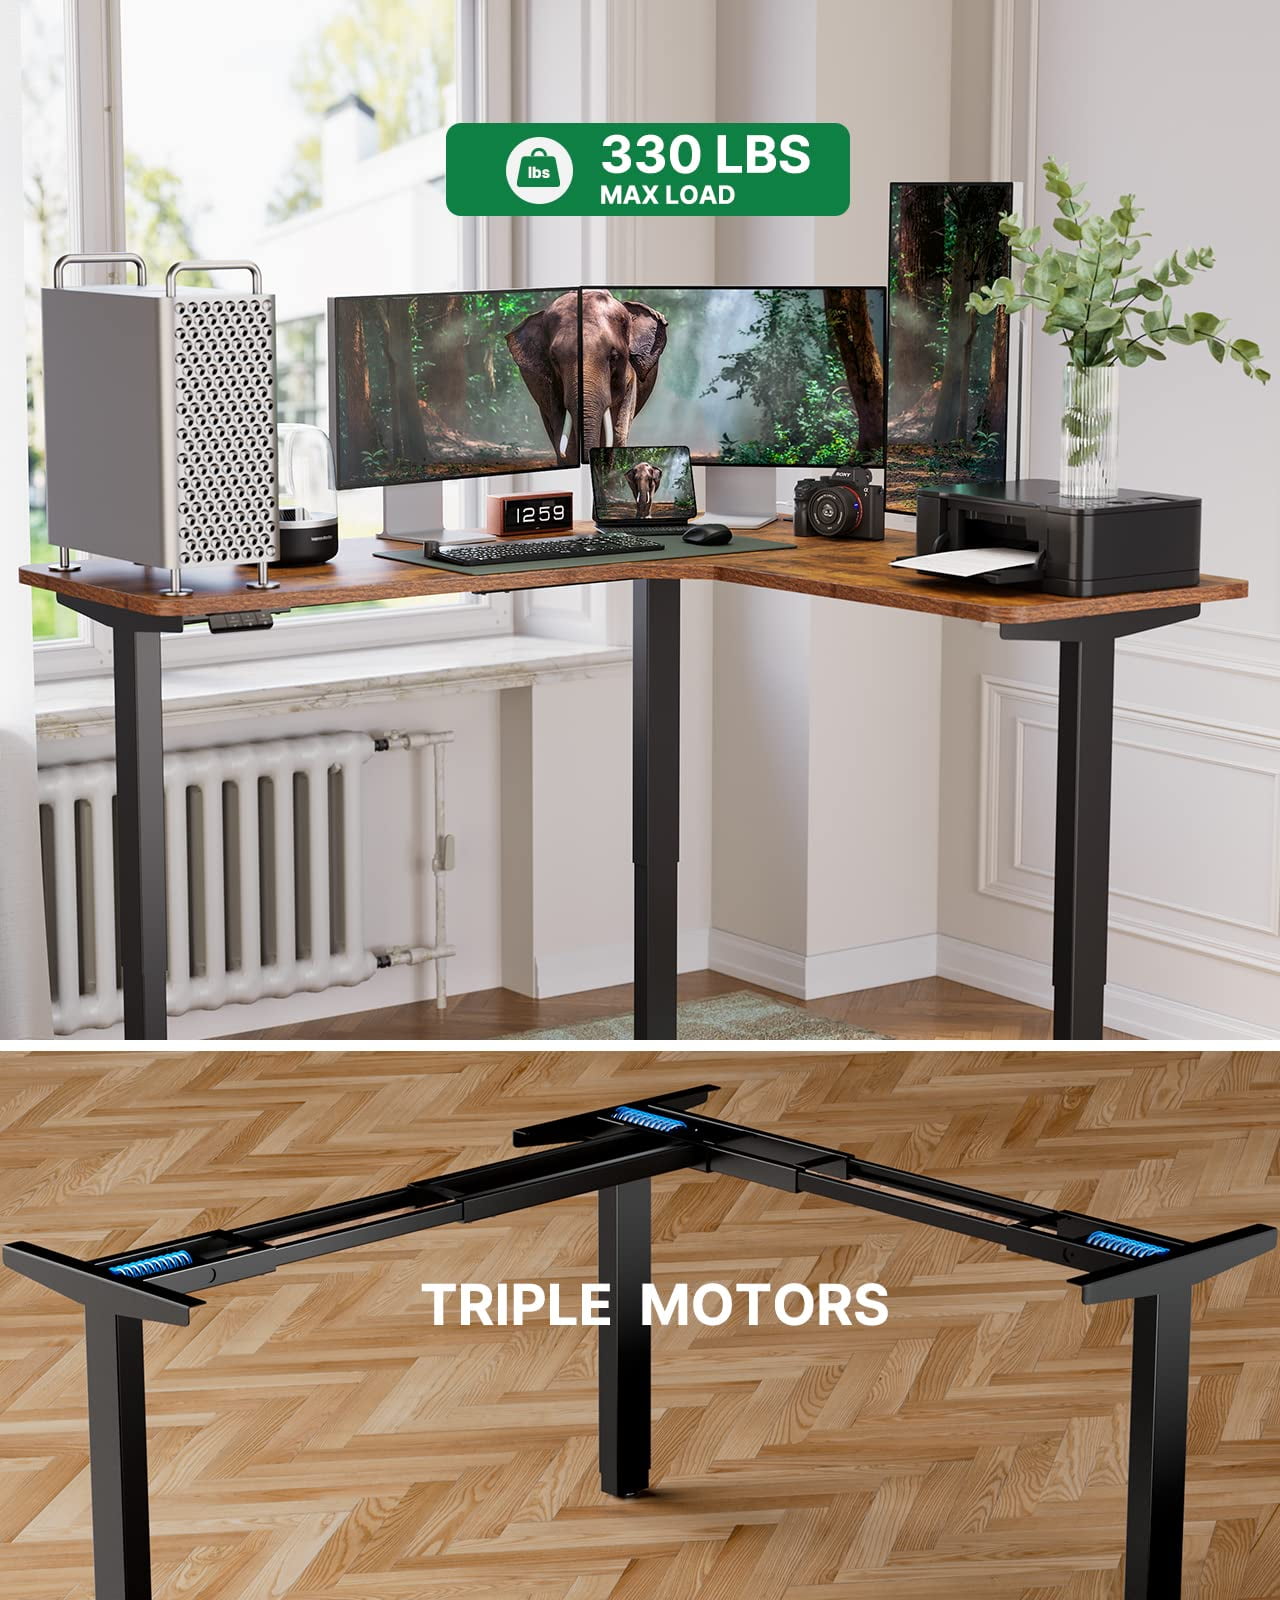 Dripex Standing Desk, 63/ 71 L Shaped Desk Adjustable Height